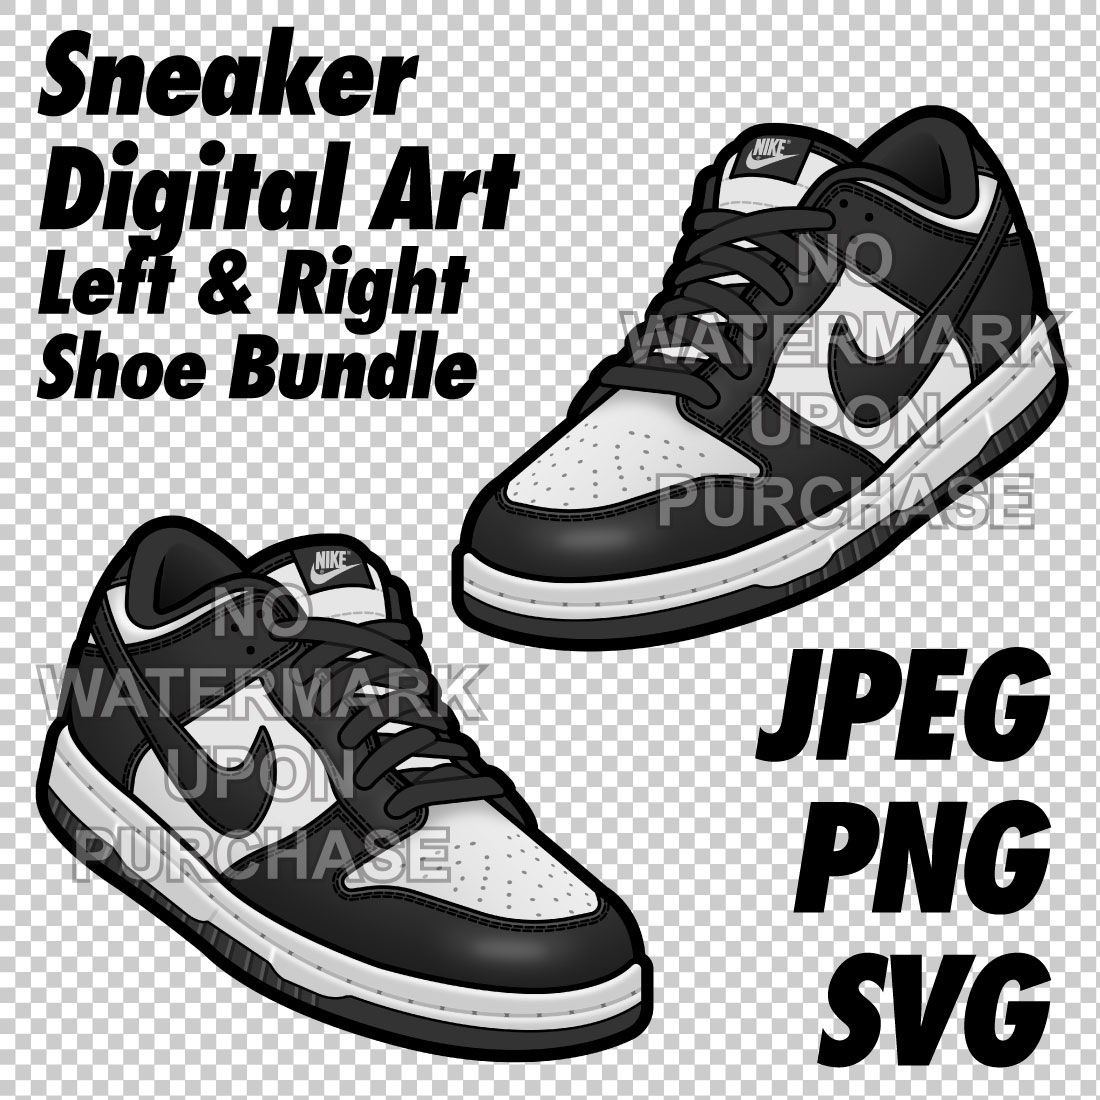 Dunk Low Panda JPEG PNG SVG Sneaker Art right & left shoe bundle cover image.